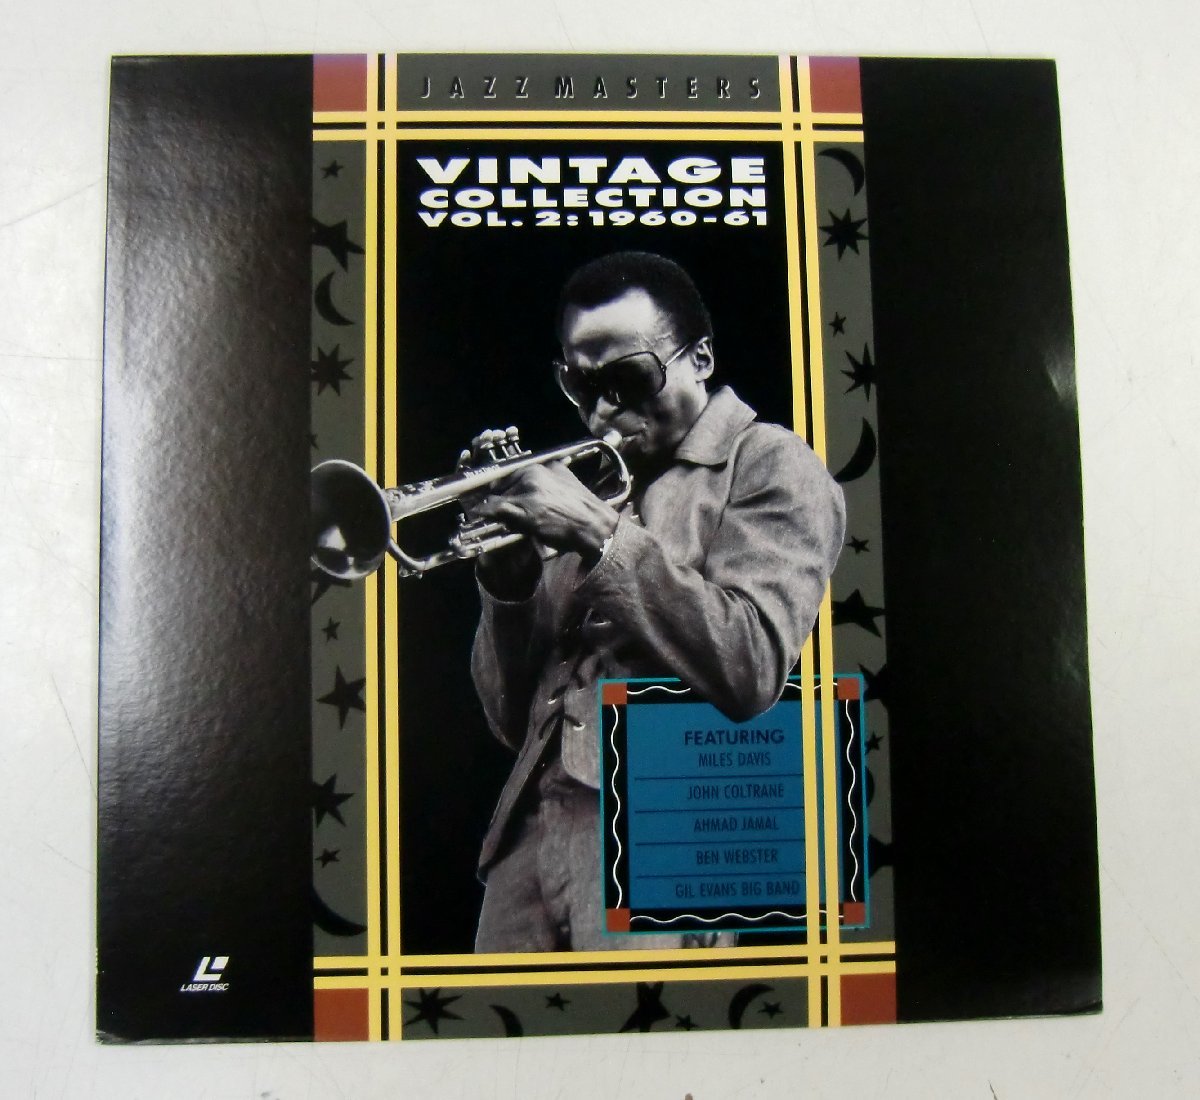 LD Jazzmaster zJAZZ MASTERS VINTAGE COLLECTION VOL.2:1960-61 laser disk [o165]